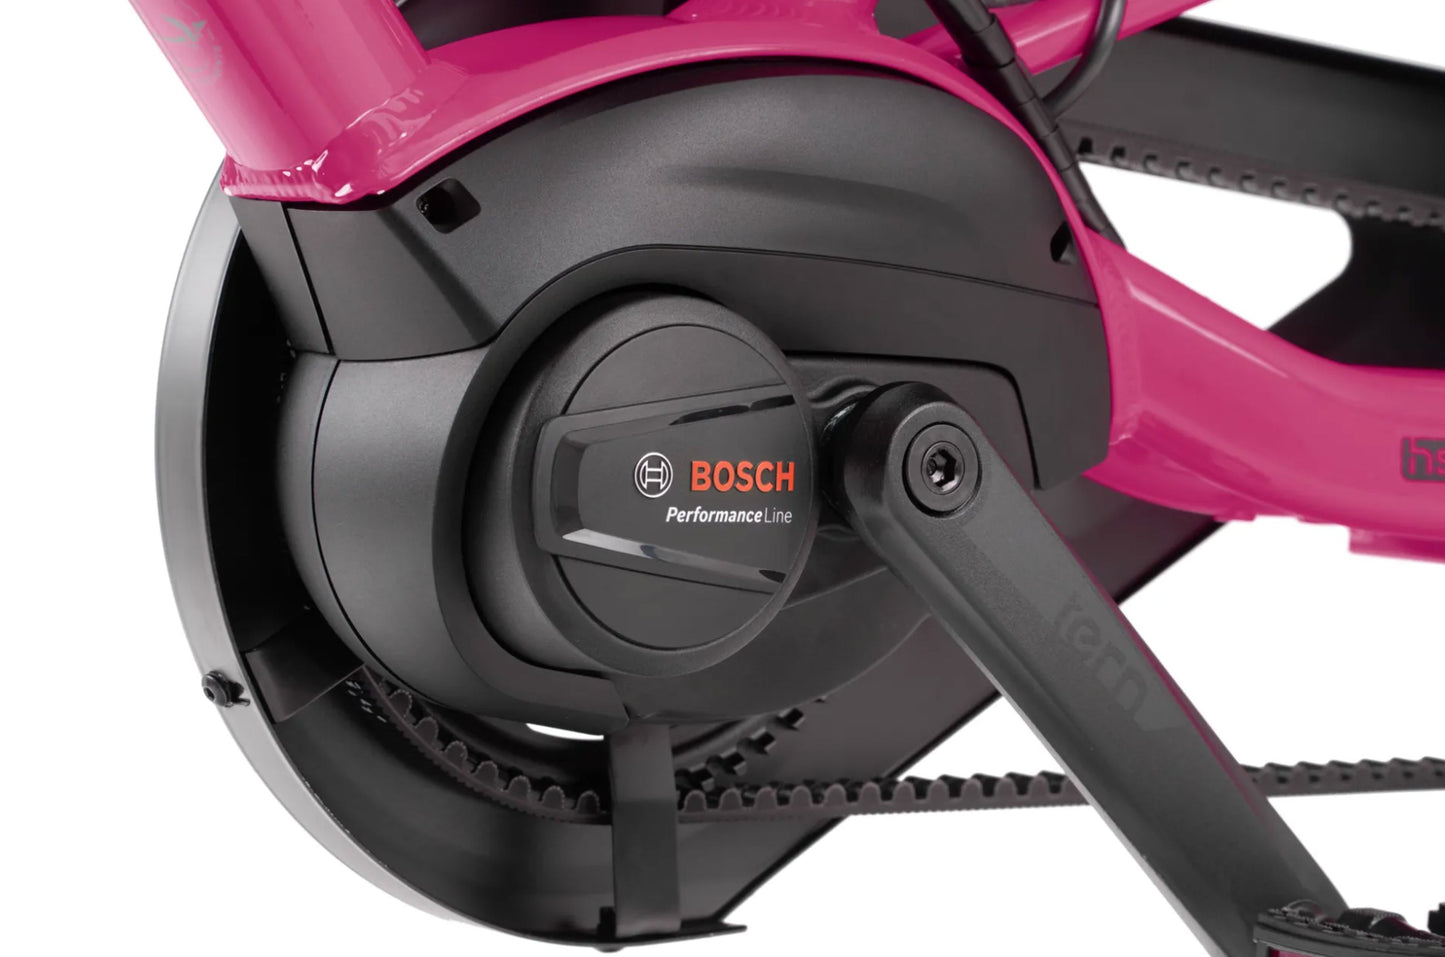 Tern HSD P5i Bosch Performance line motor closeup